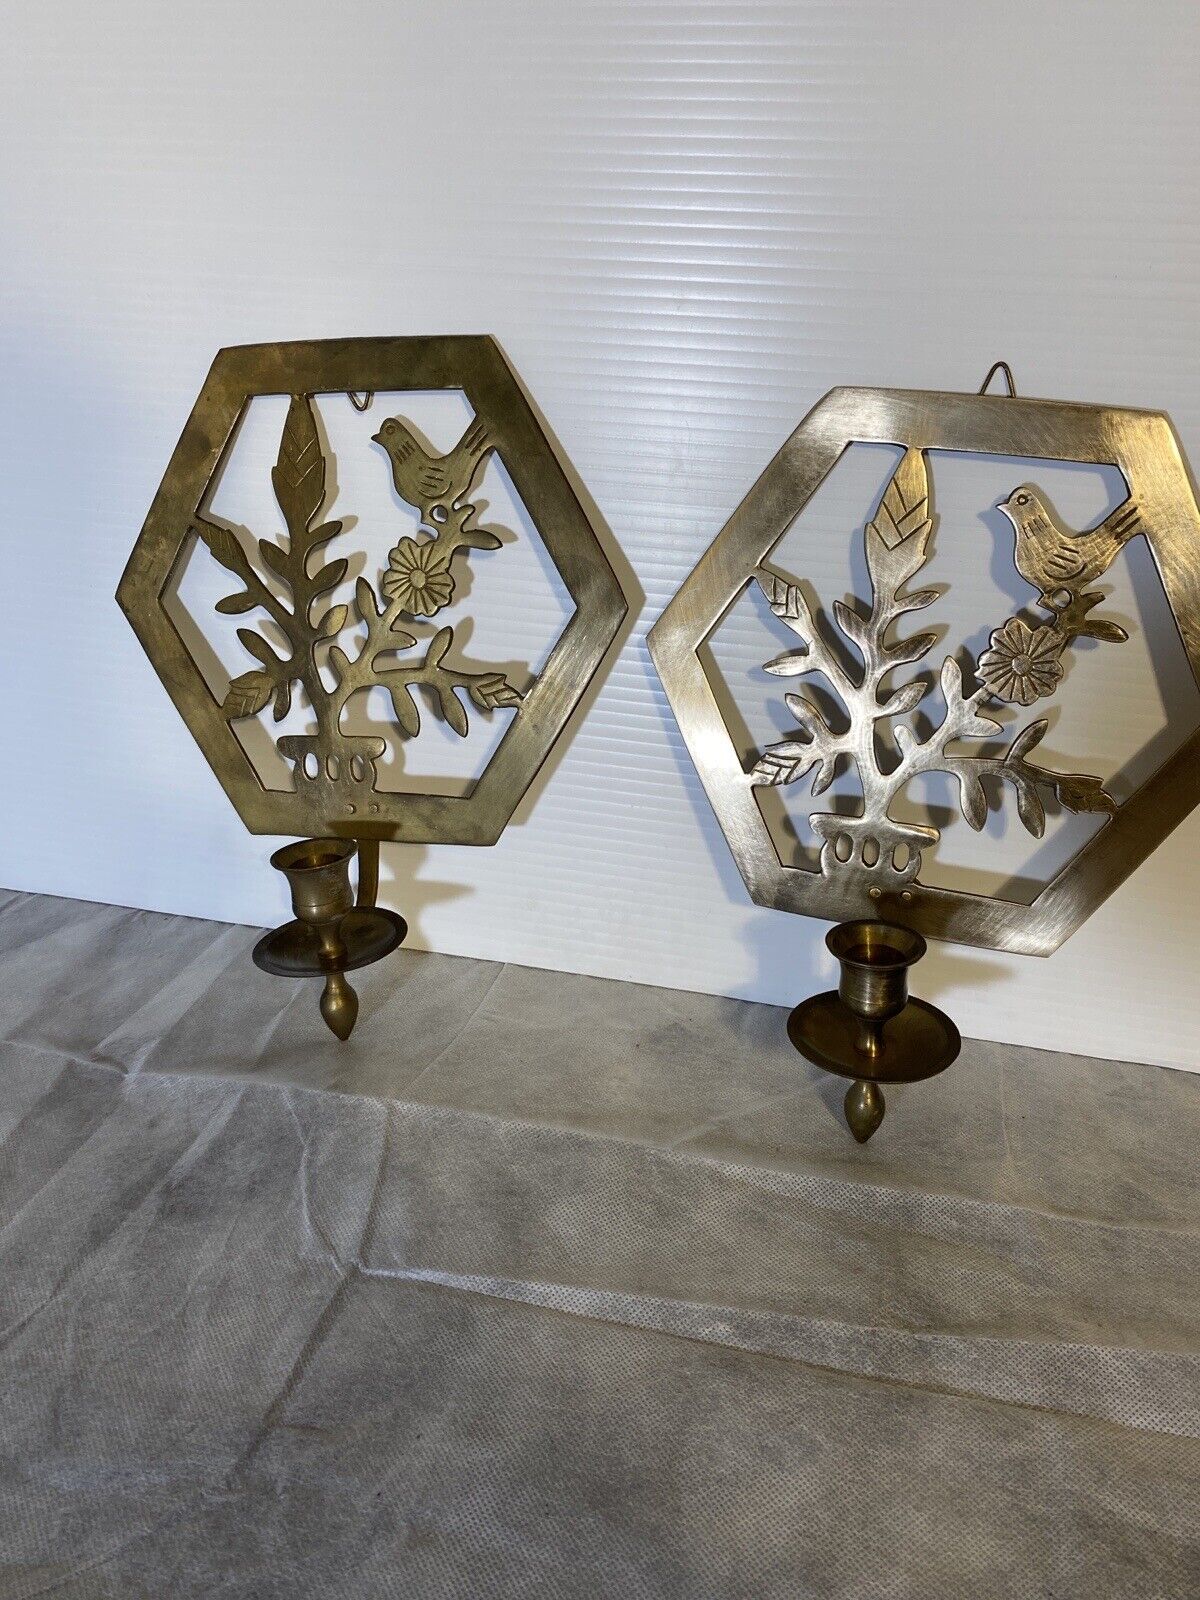 VTG Solid Brass Gatco Wall Sconces Set of 2 Bird Floral Design Candle Holder